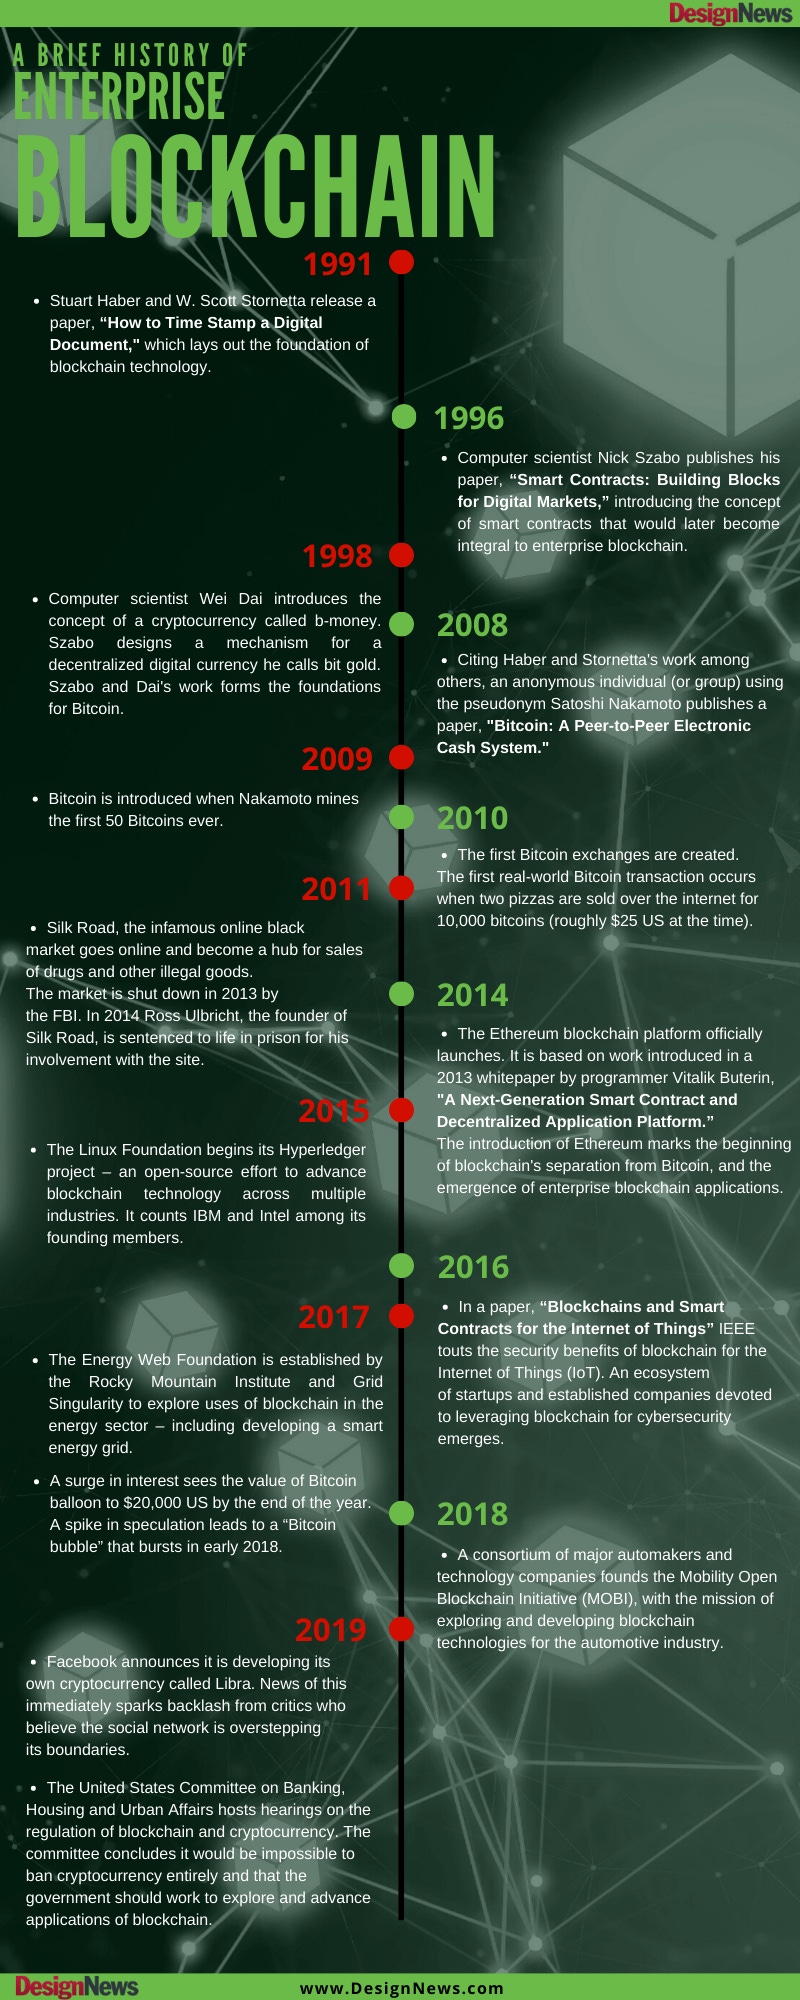 A Brief History Of Enterprise Blockchain